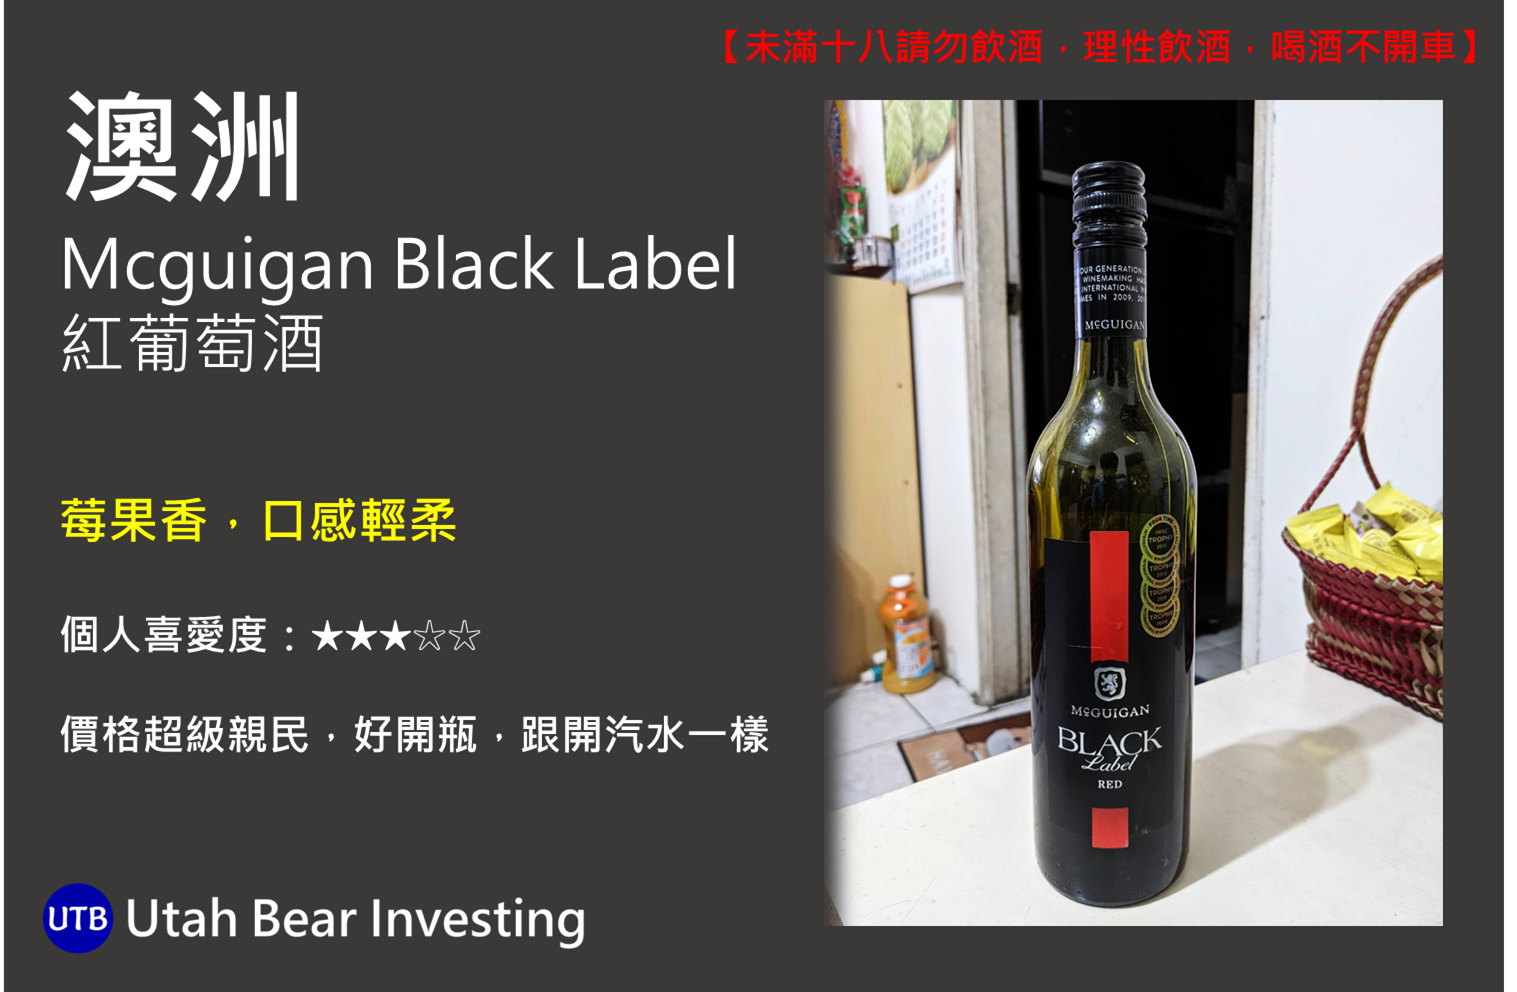 [心得] Mcguigan Black Label Costco平價紅酒